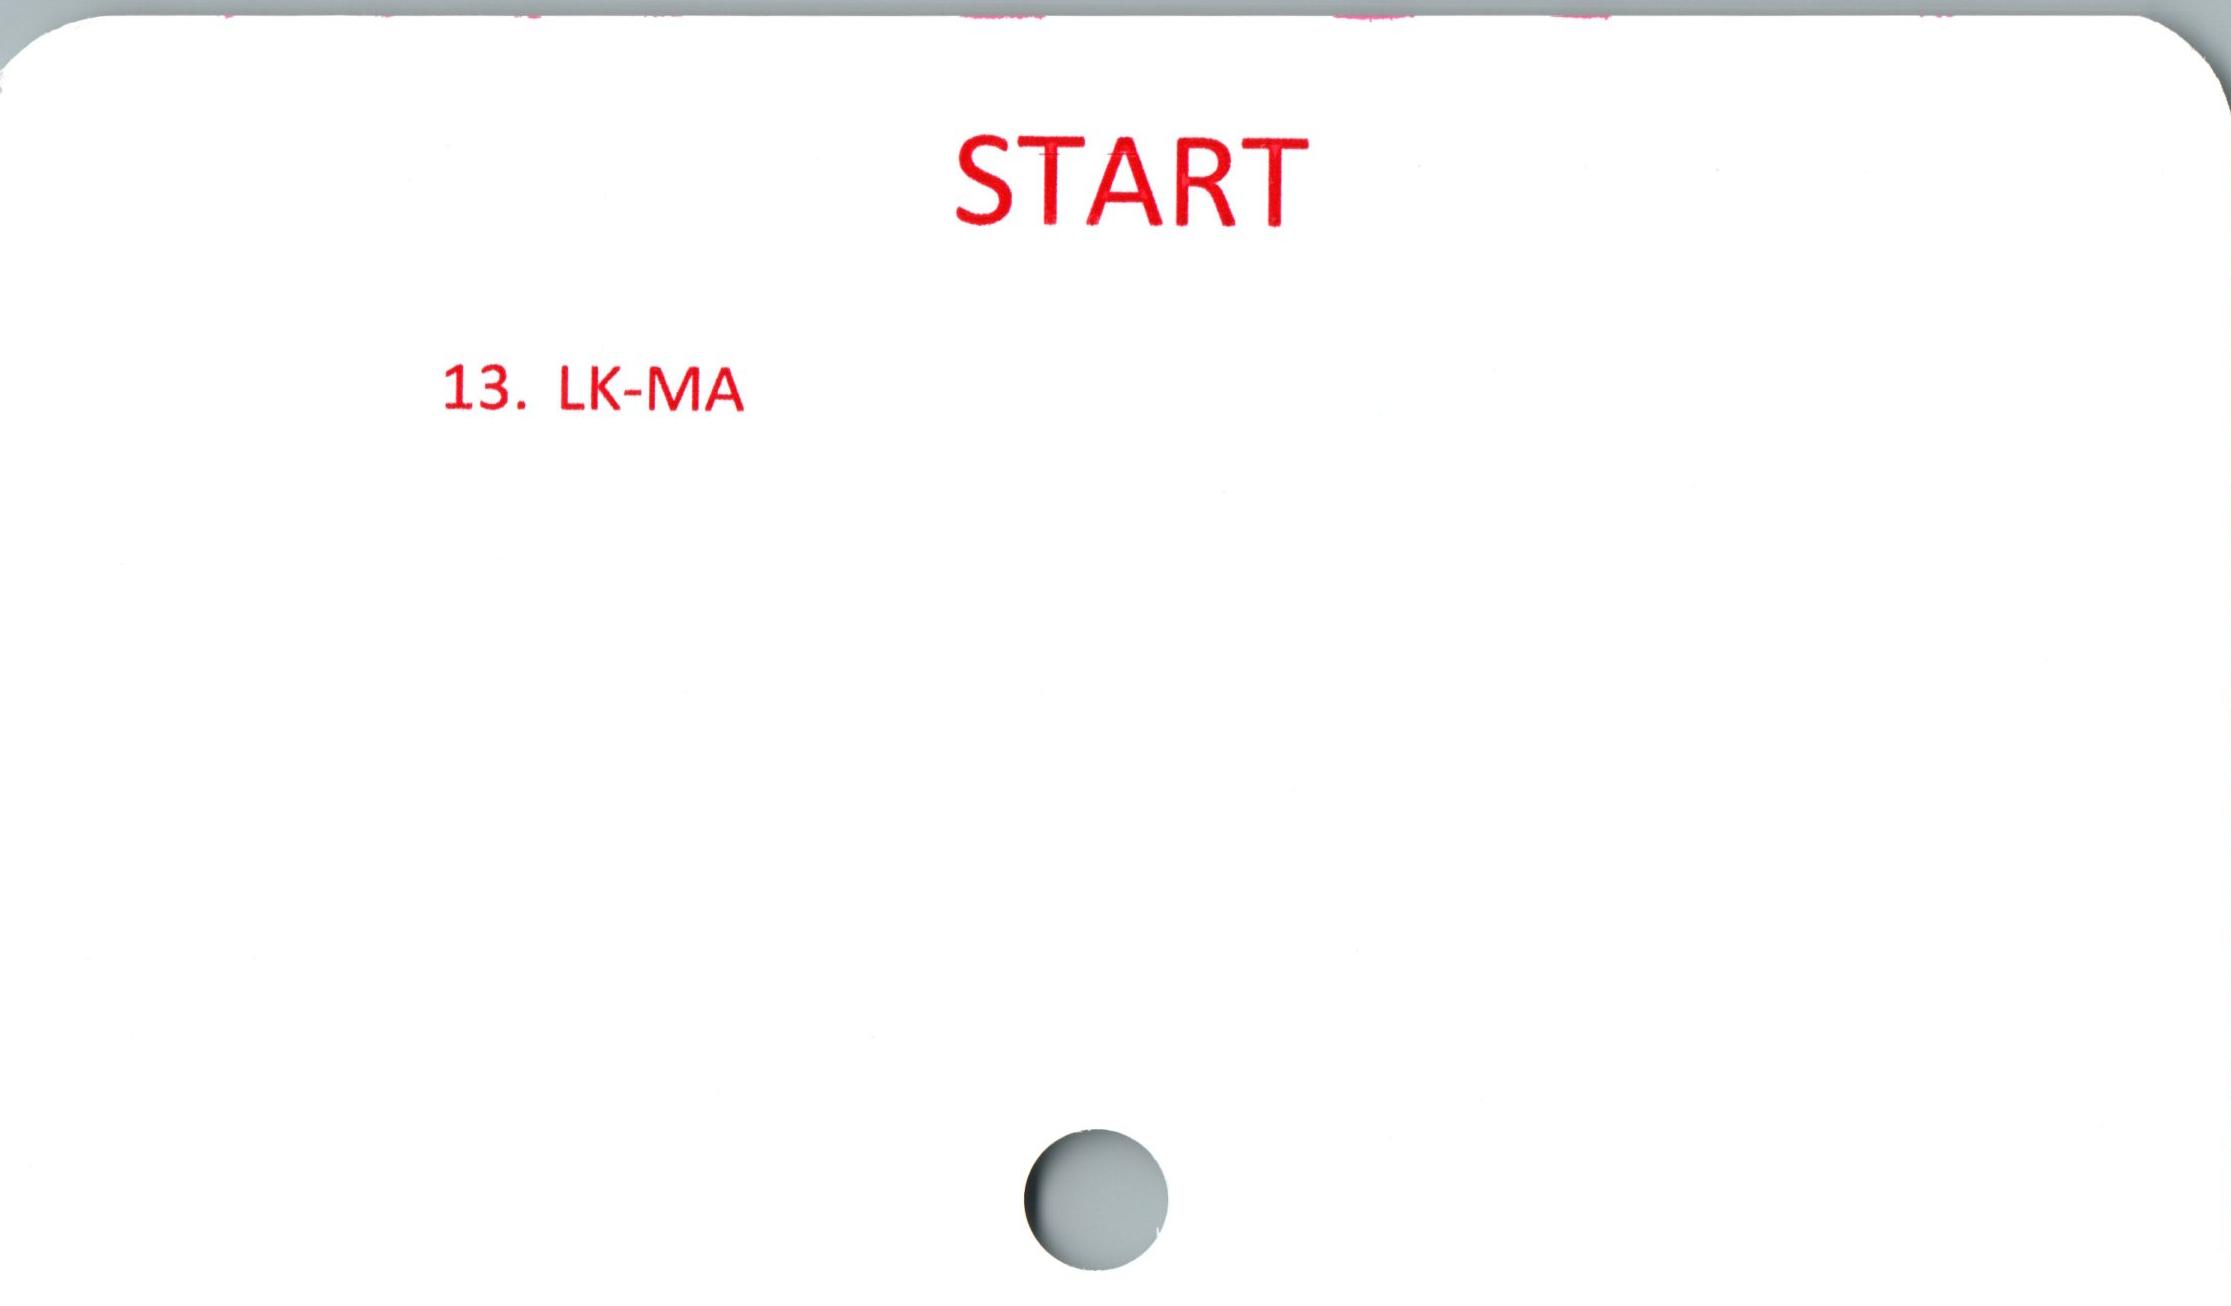 START ﻿START

13. LK-MA